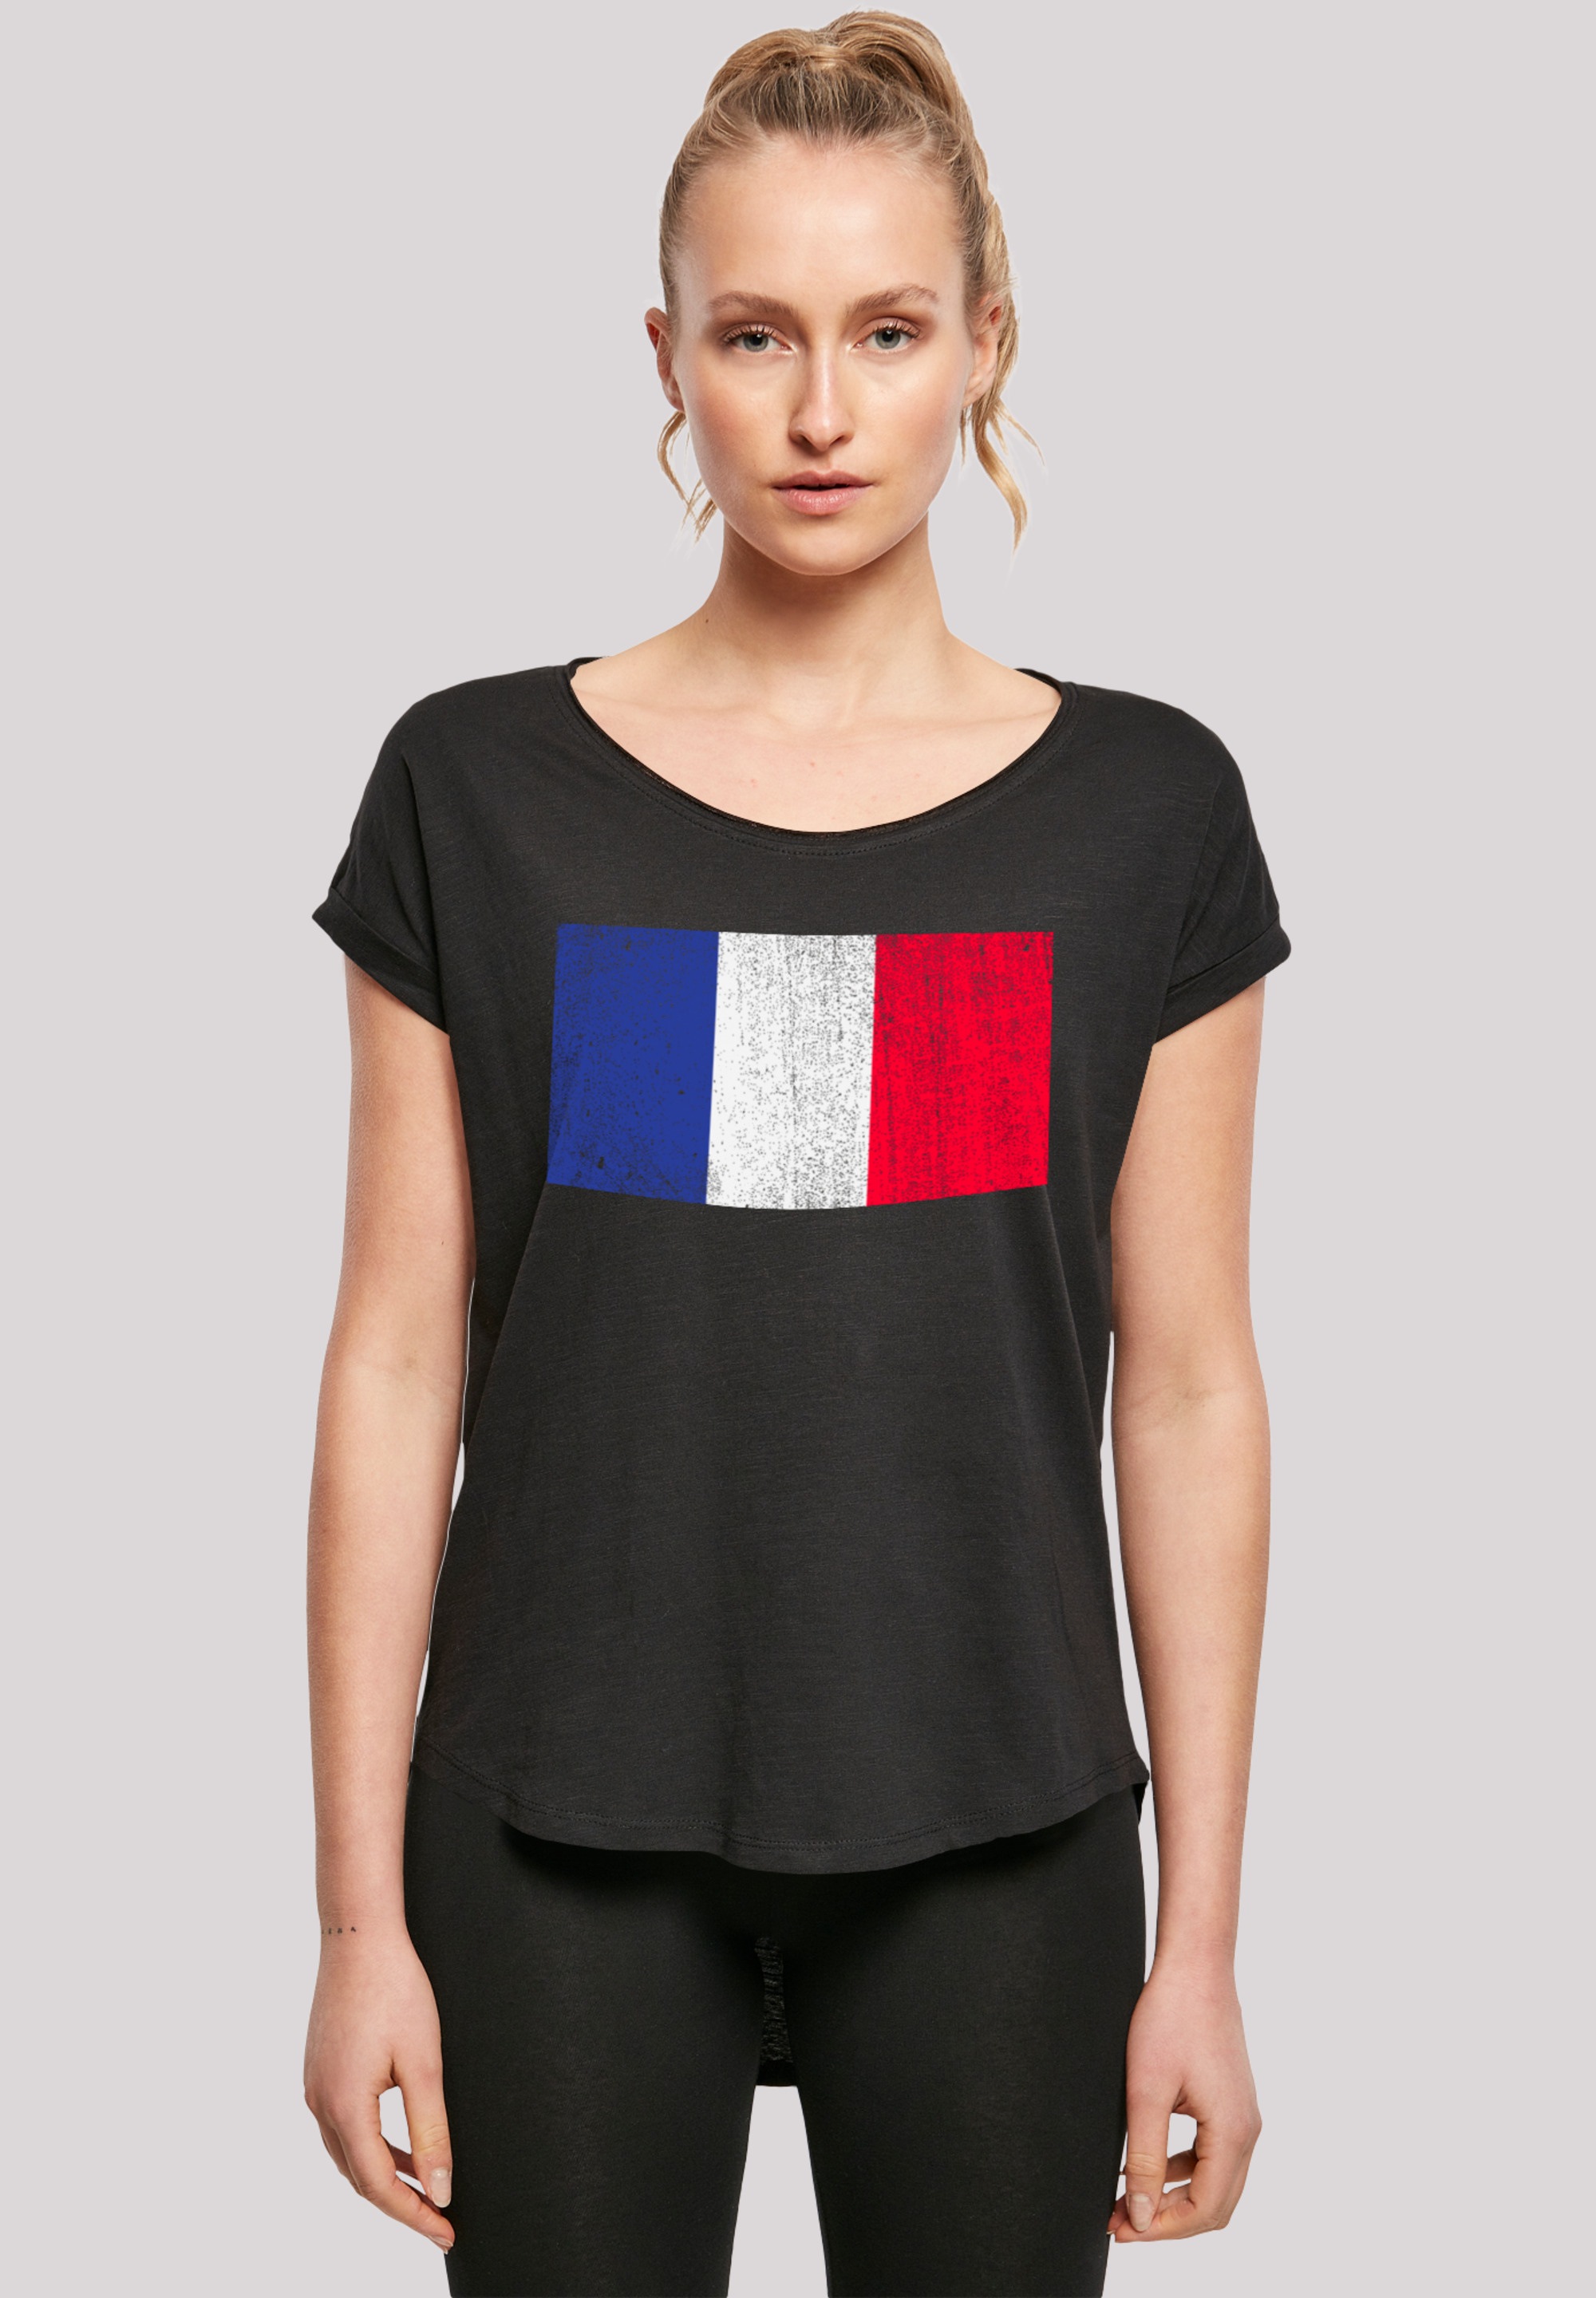 T-Shirt Frankreich distressed«, Print Flagge »France F4NT4STIC shoppen